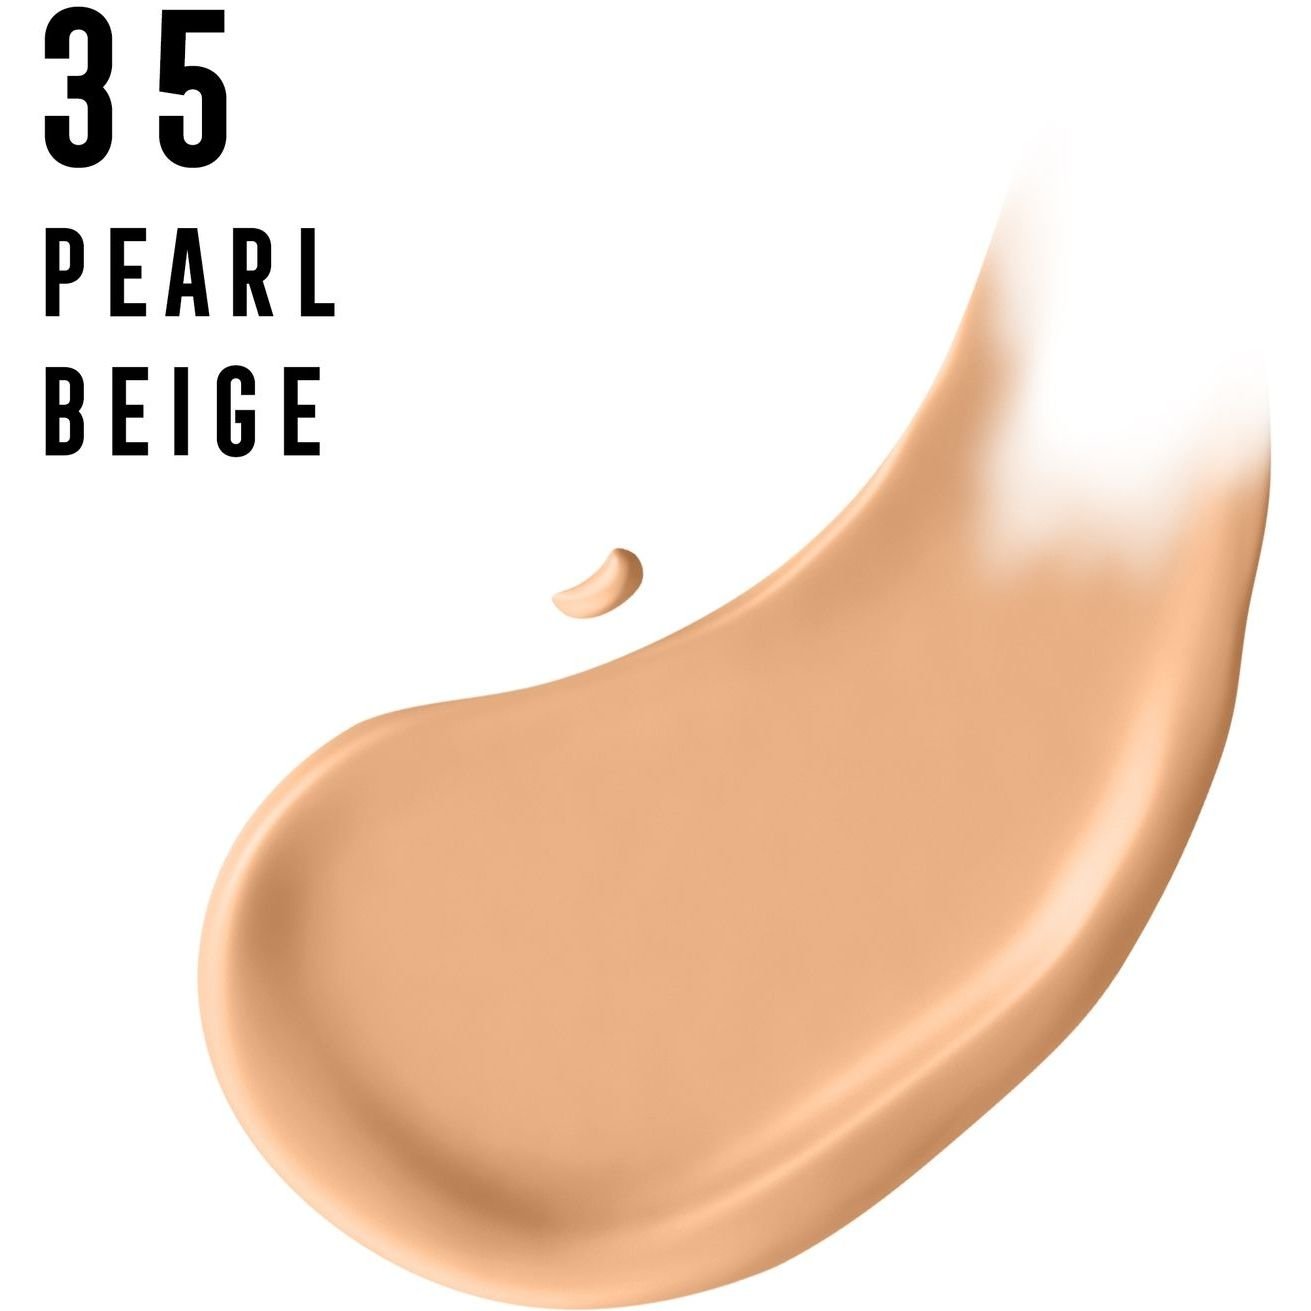 Тональная основа Max Factor Miracle Pure Skin-Improving Foundation SPF30 тон 035 (Pearl Beige) 30 мл - фото 3